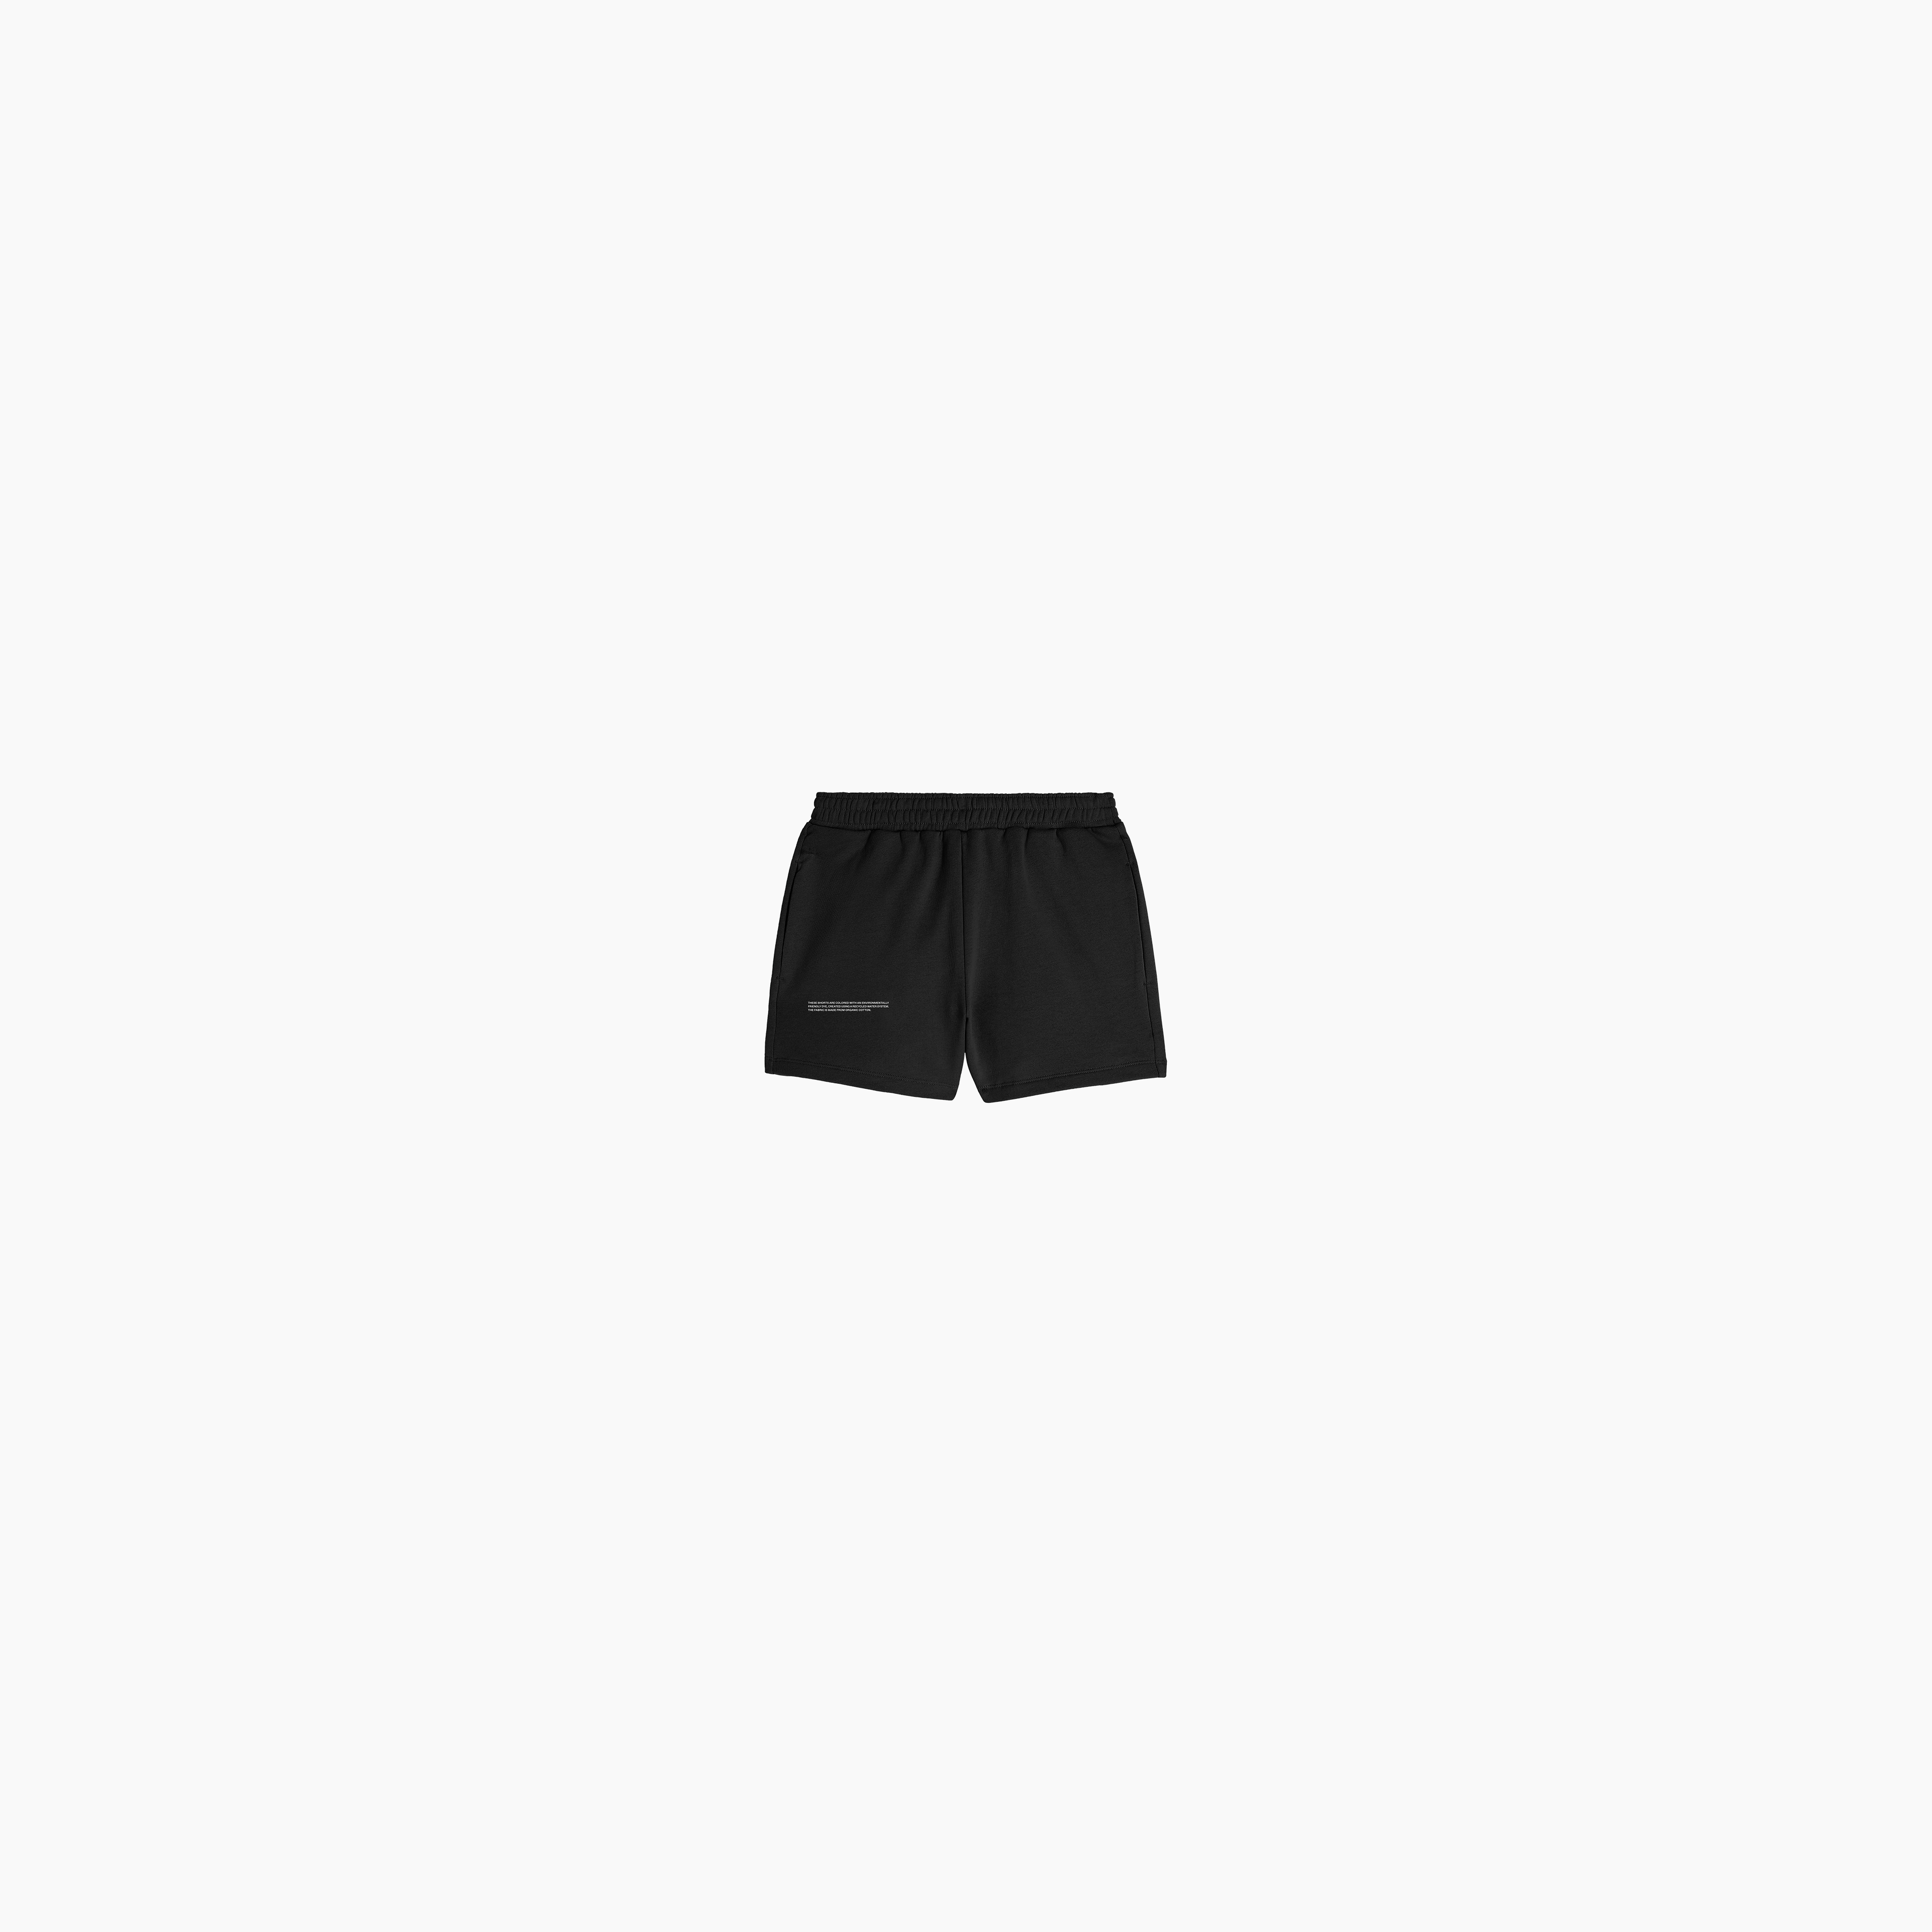 365 Midweight Shorts—black